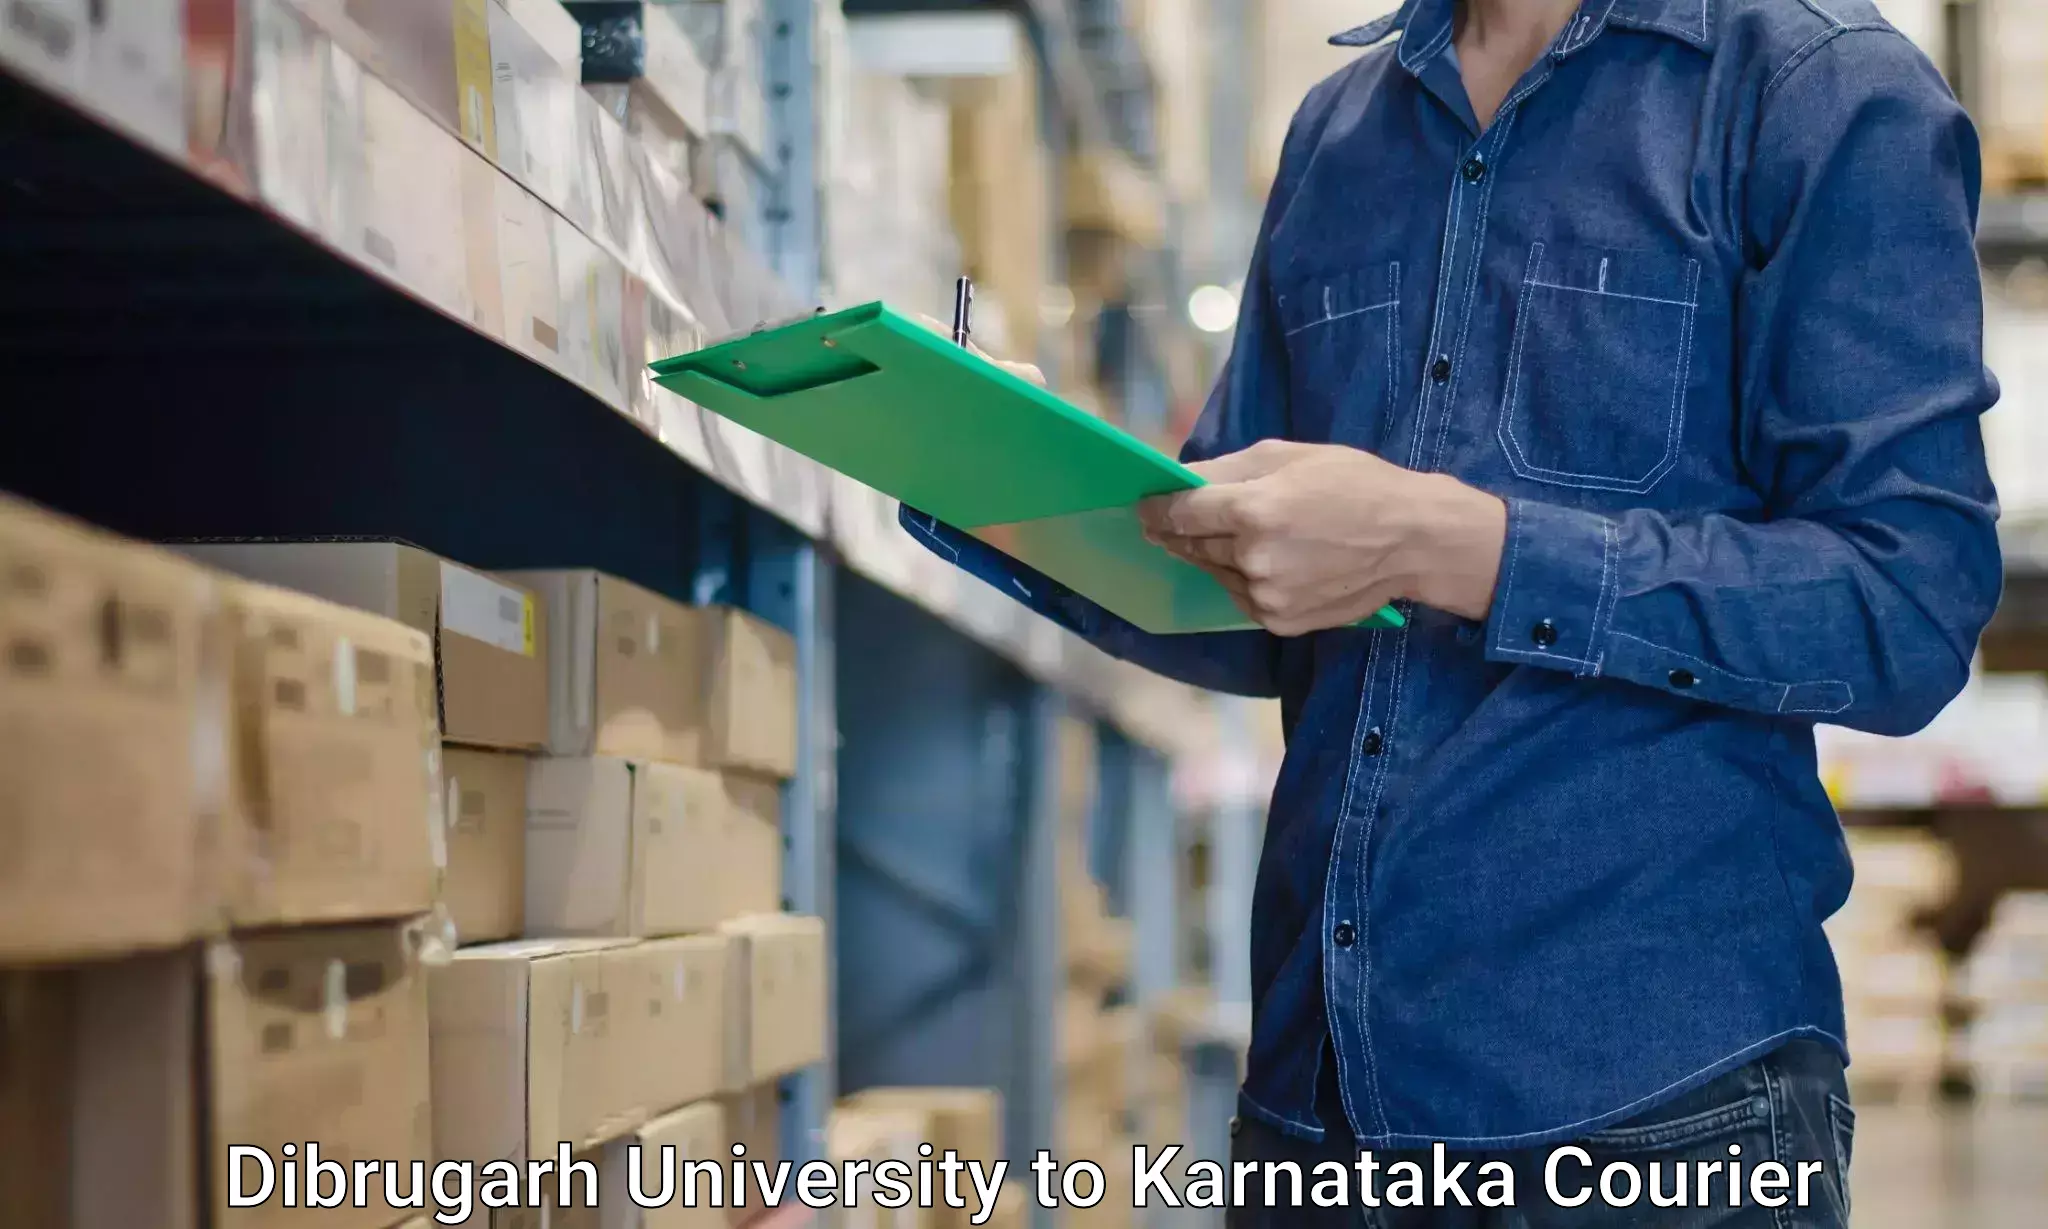 Doorstep moving services Dibrugarh University to Karnataka